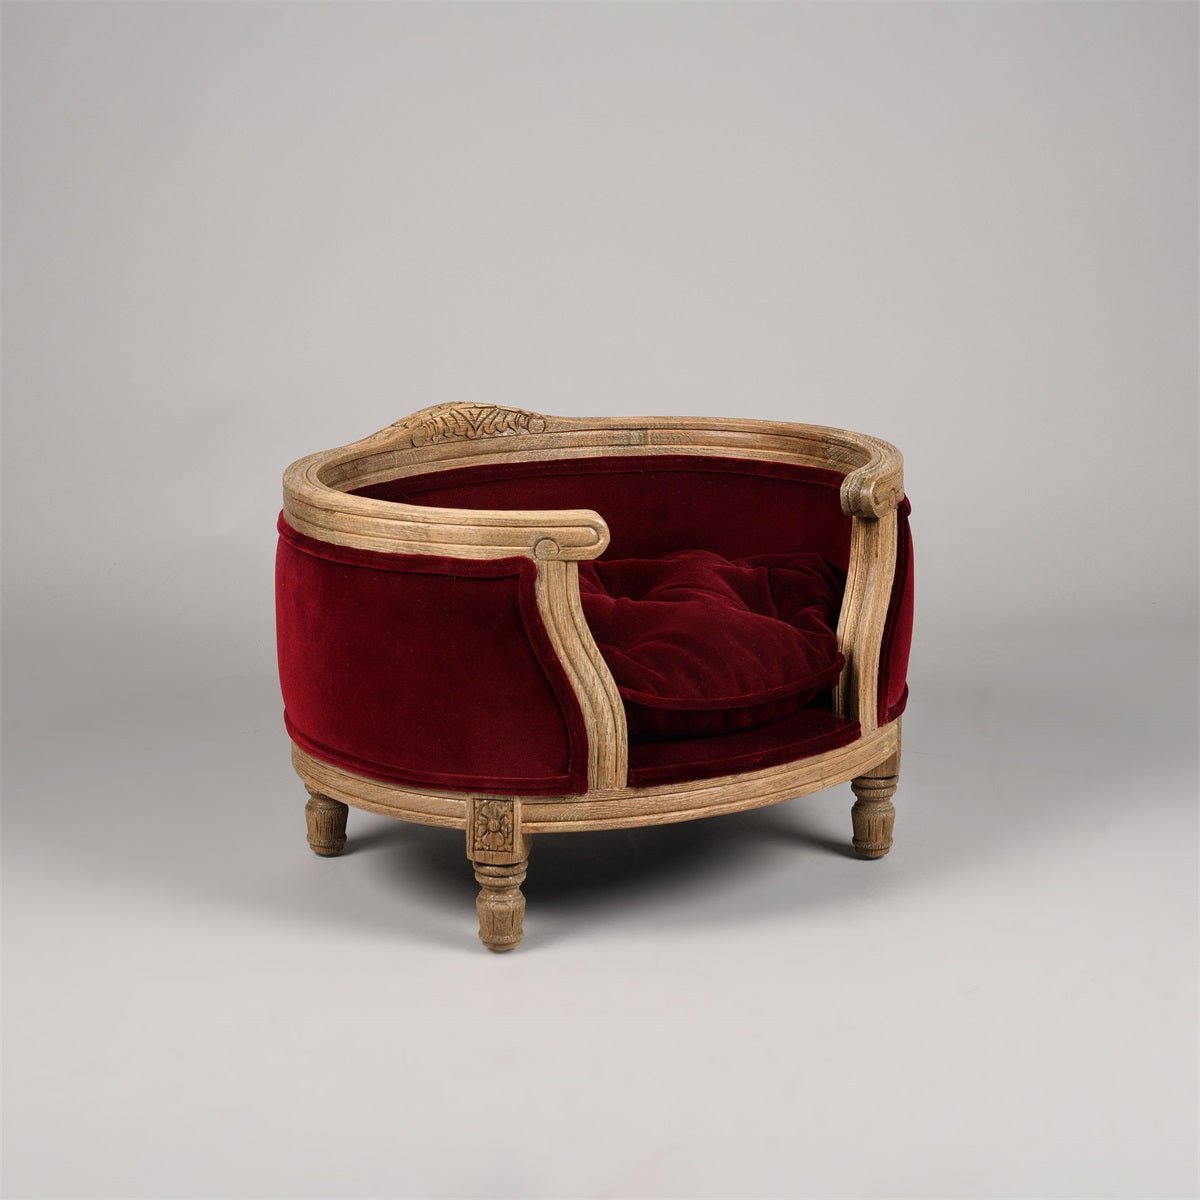 PGELO01403S - George design sänky - Samettinen rubiininpunainen - S (49 x 40 x 31cm) - Muotitassu